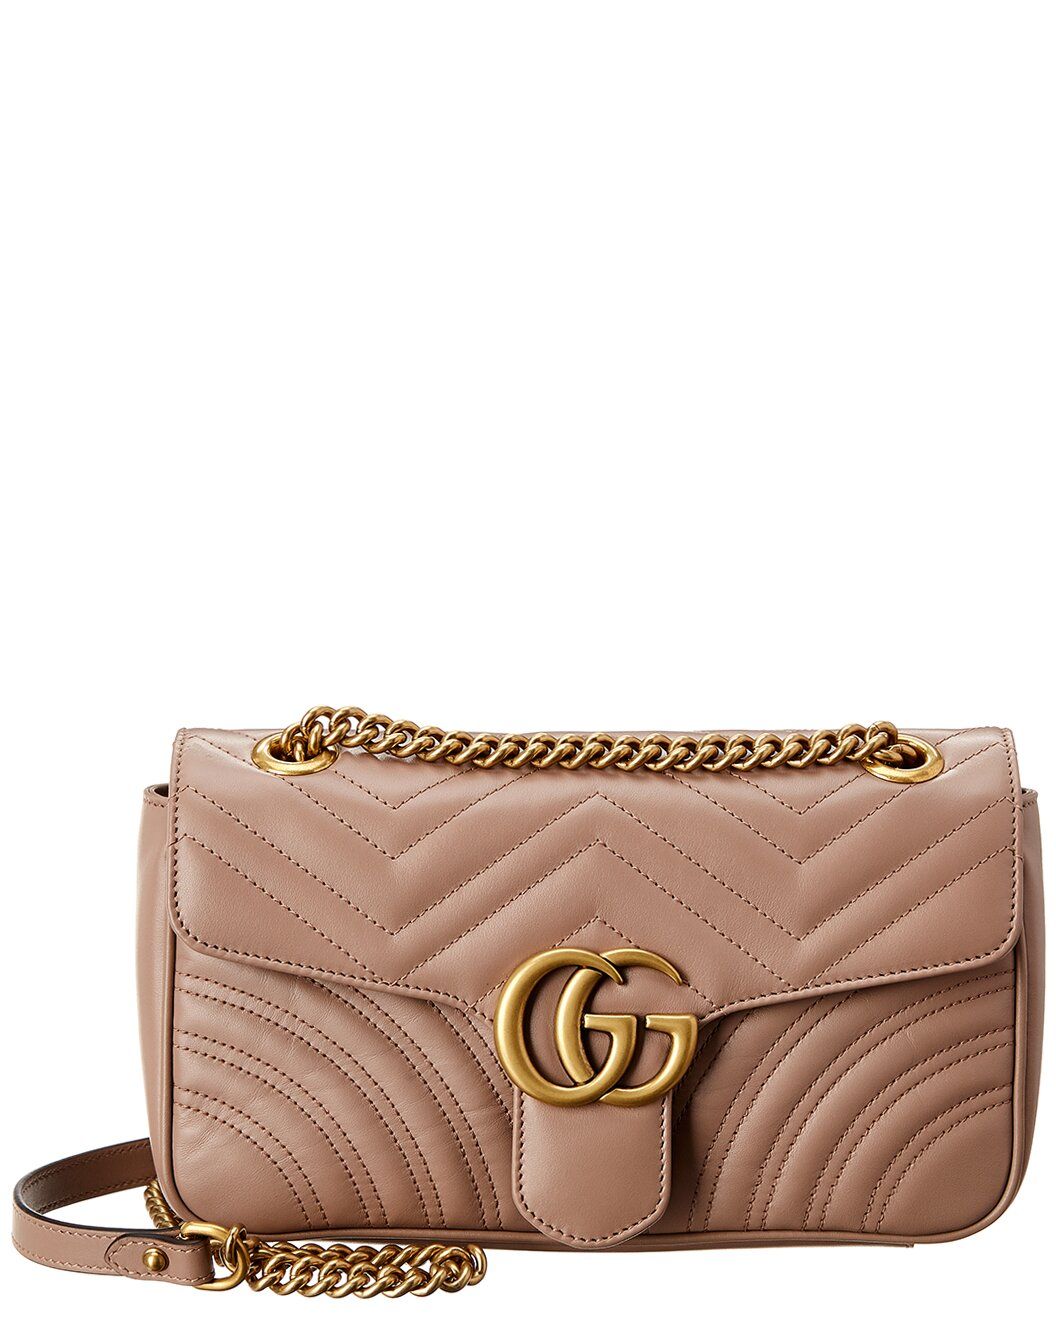 GG Marmont Small Matelasse Leather Shoulder Bag | Gilt